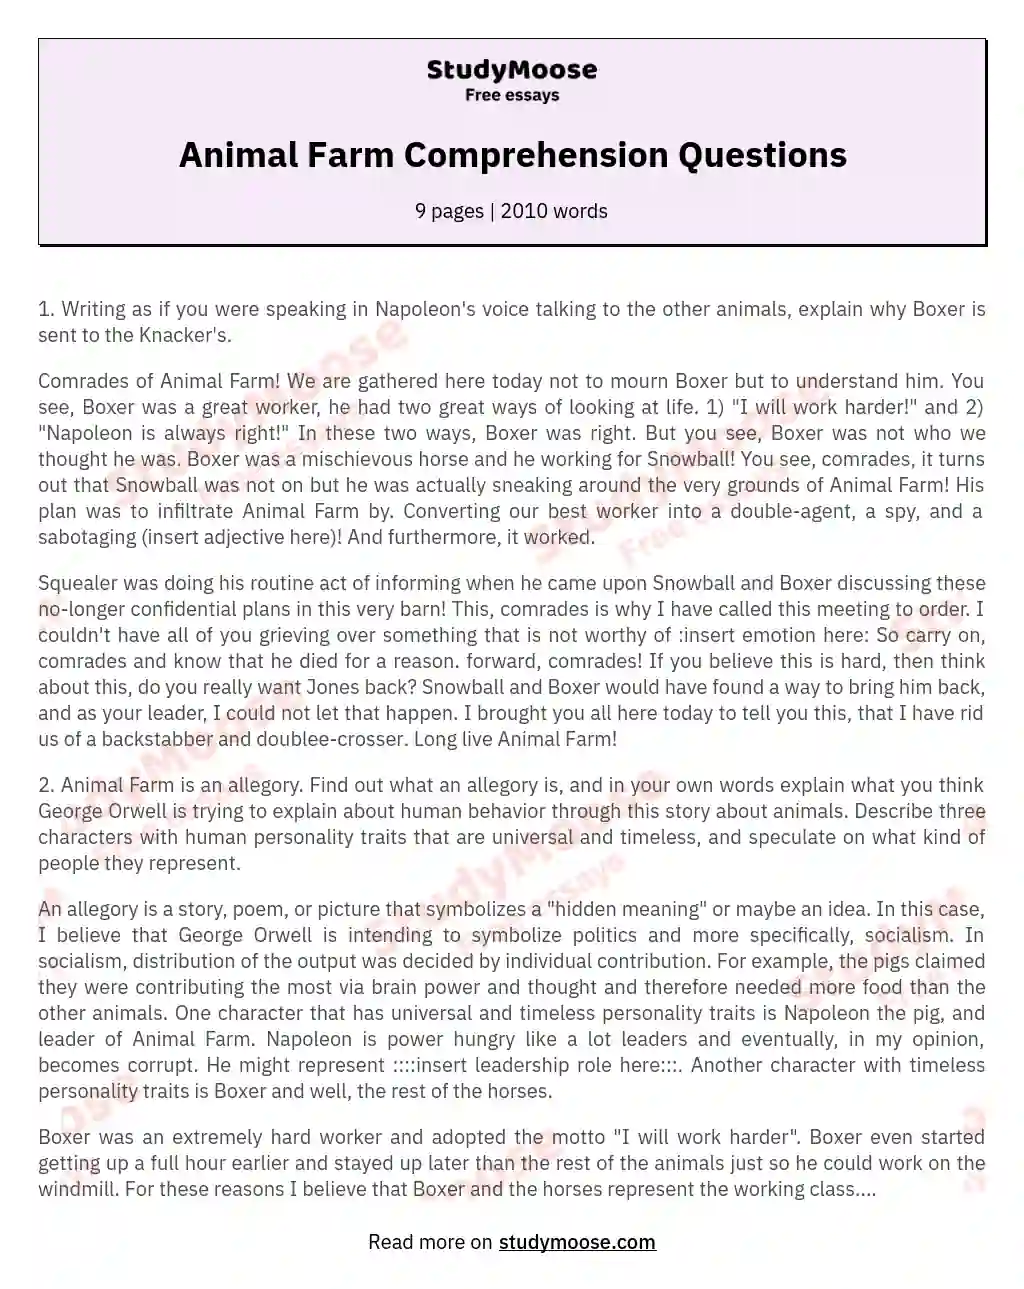 Animal Farm Comprehension Questions essay